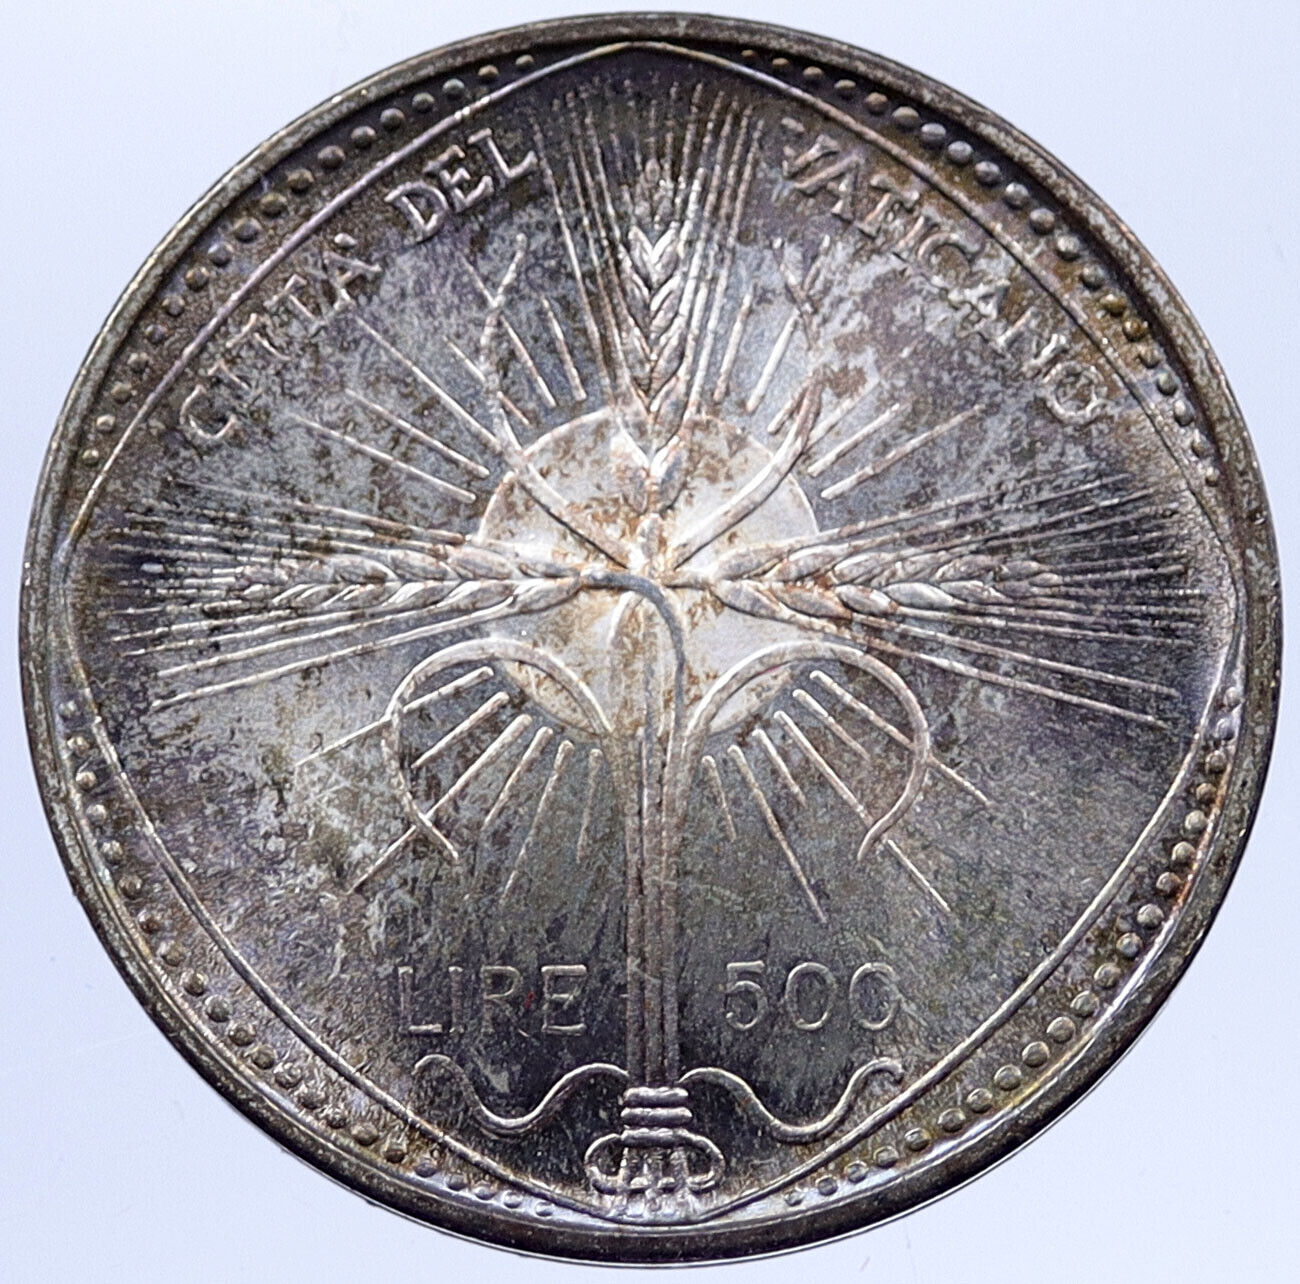 1968 VATICAN City Silver 500 Lire POPE PAUL VI Old Italian Italy Coin i119337